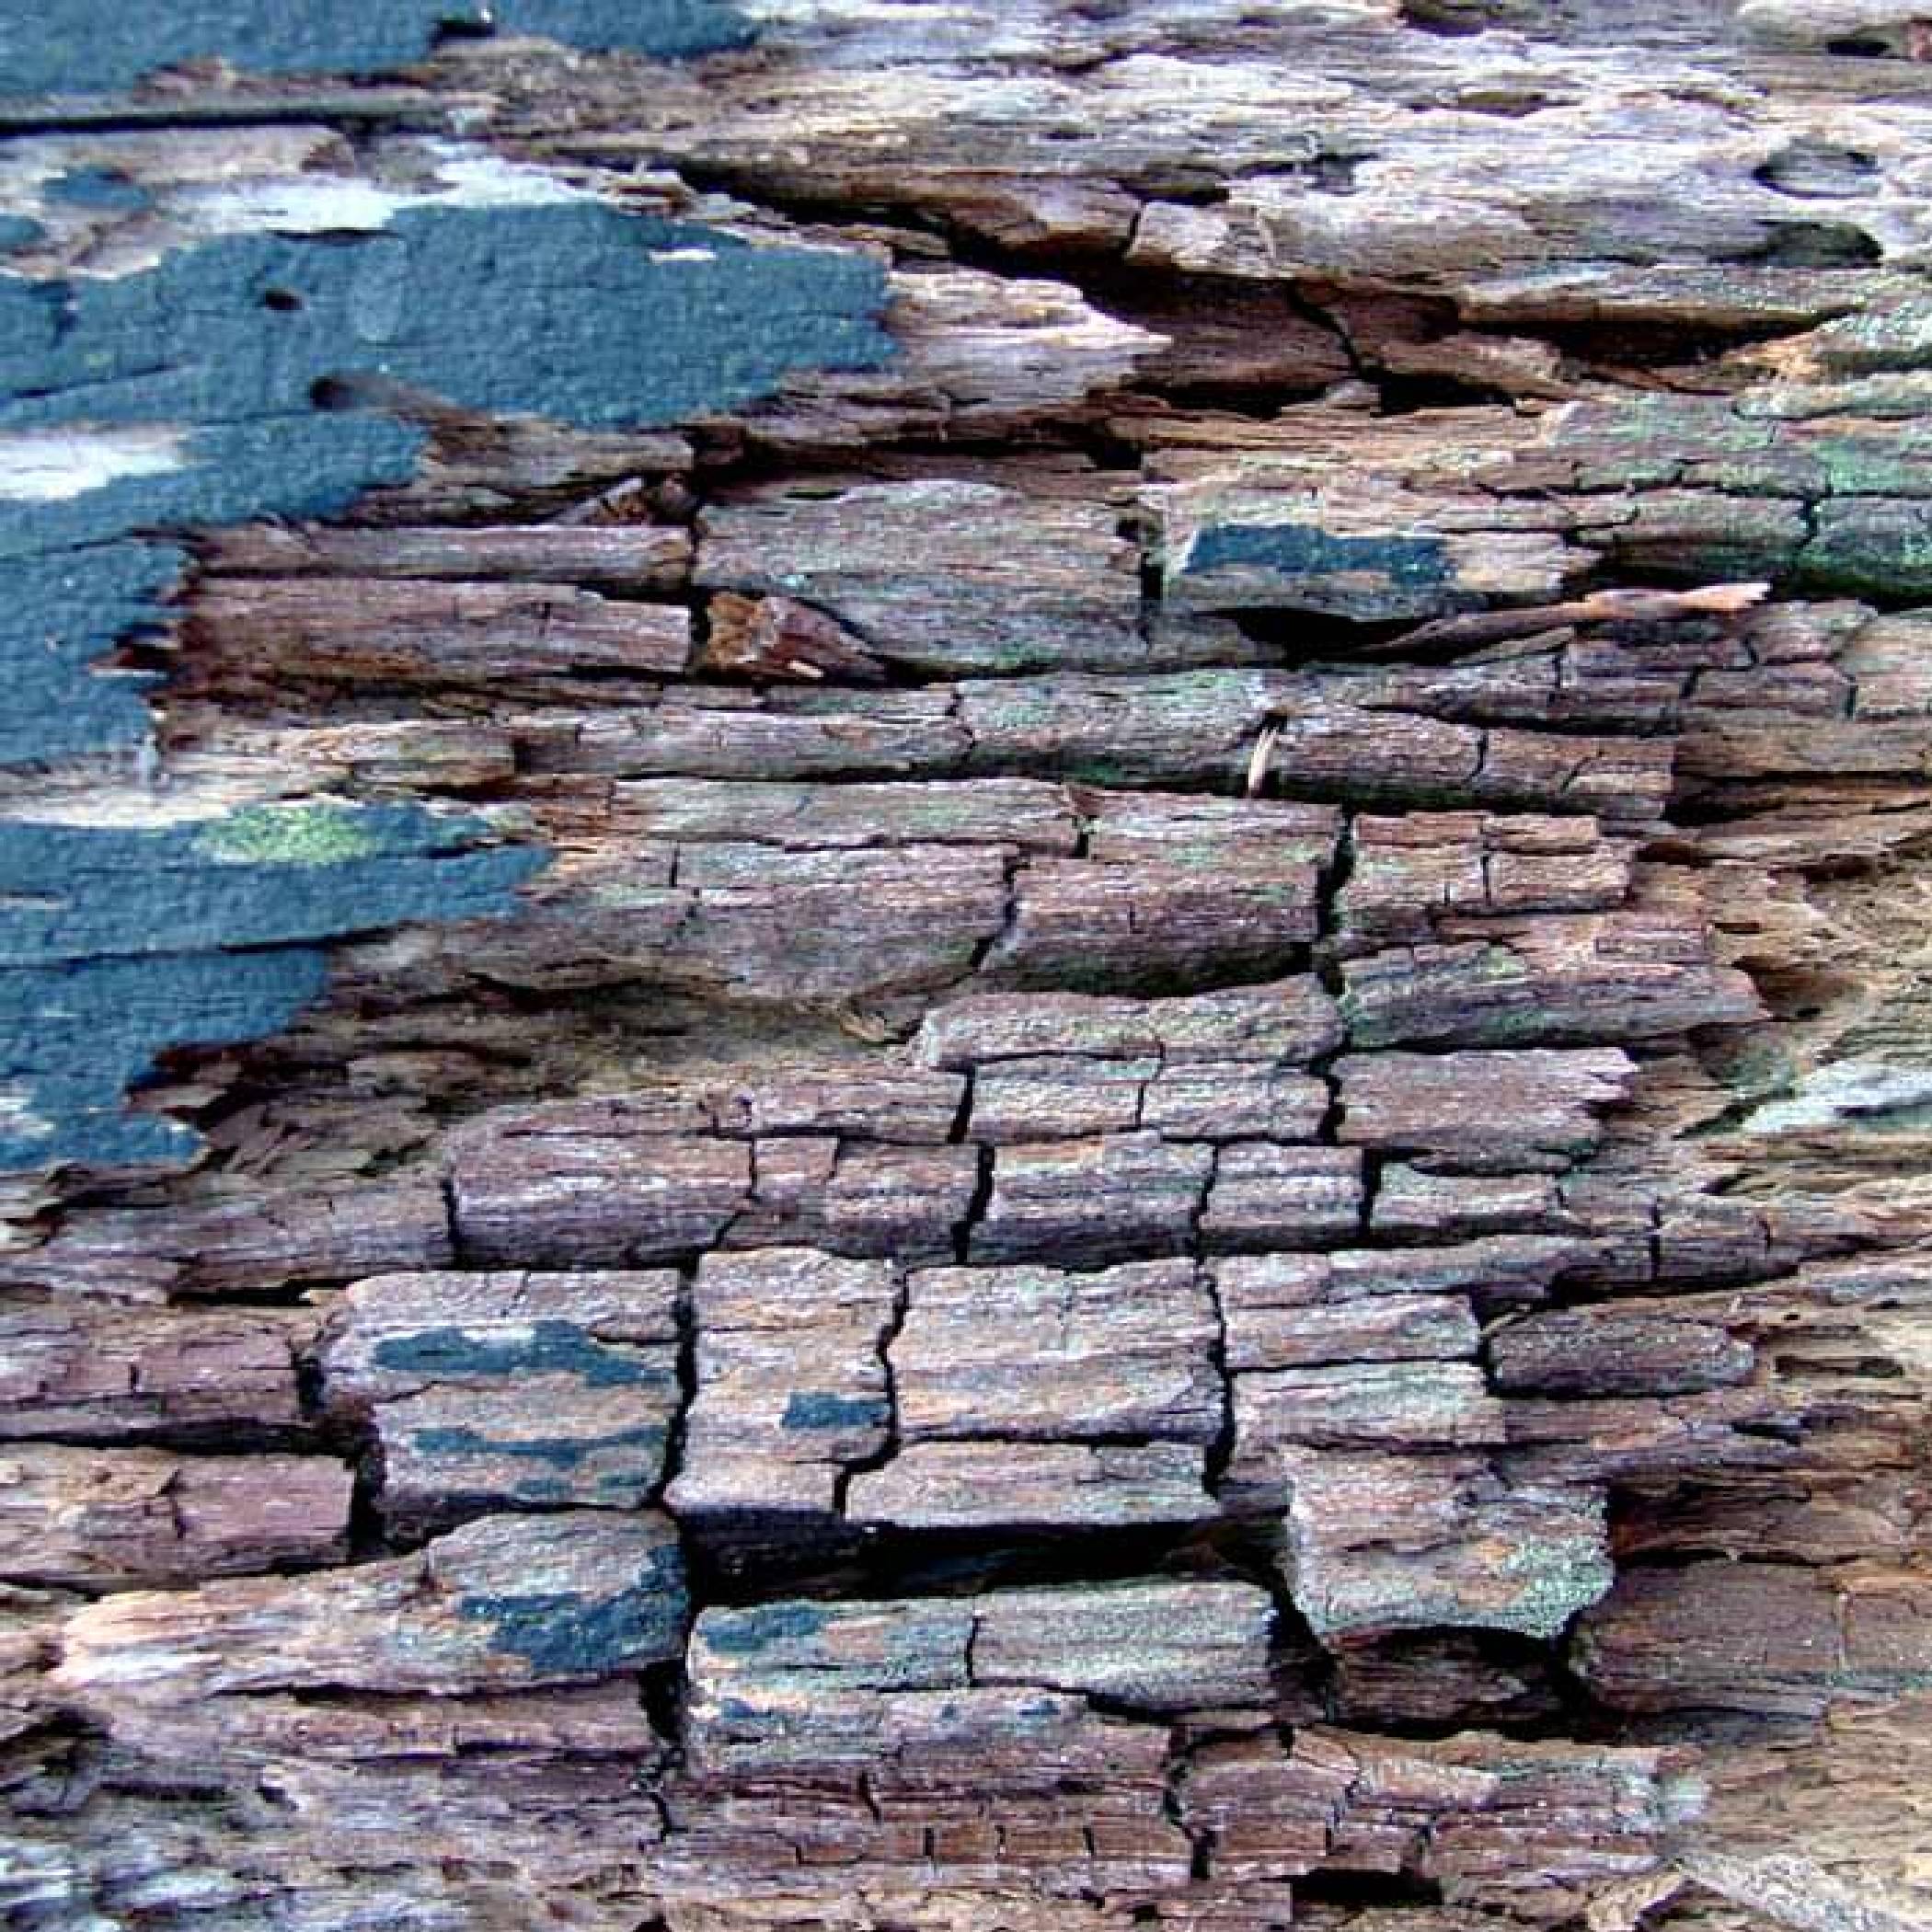 termite damage vs wood rot